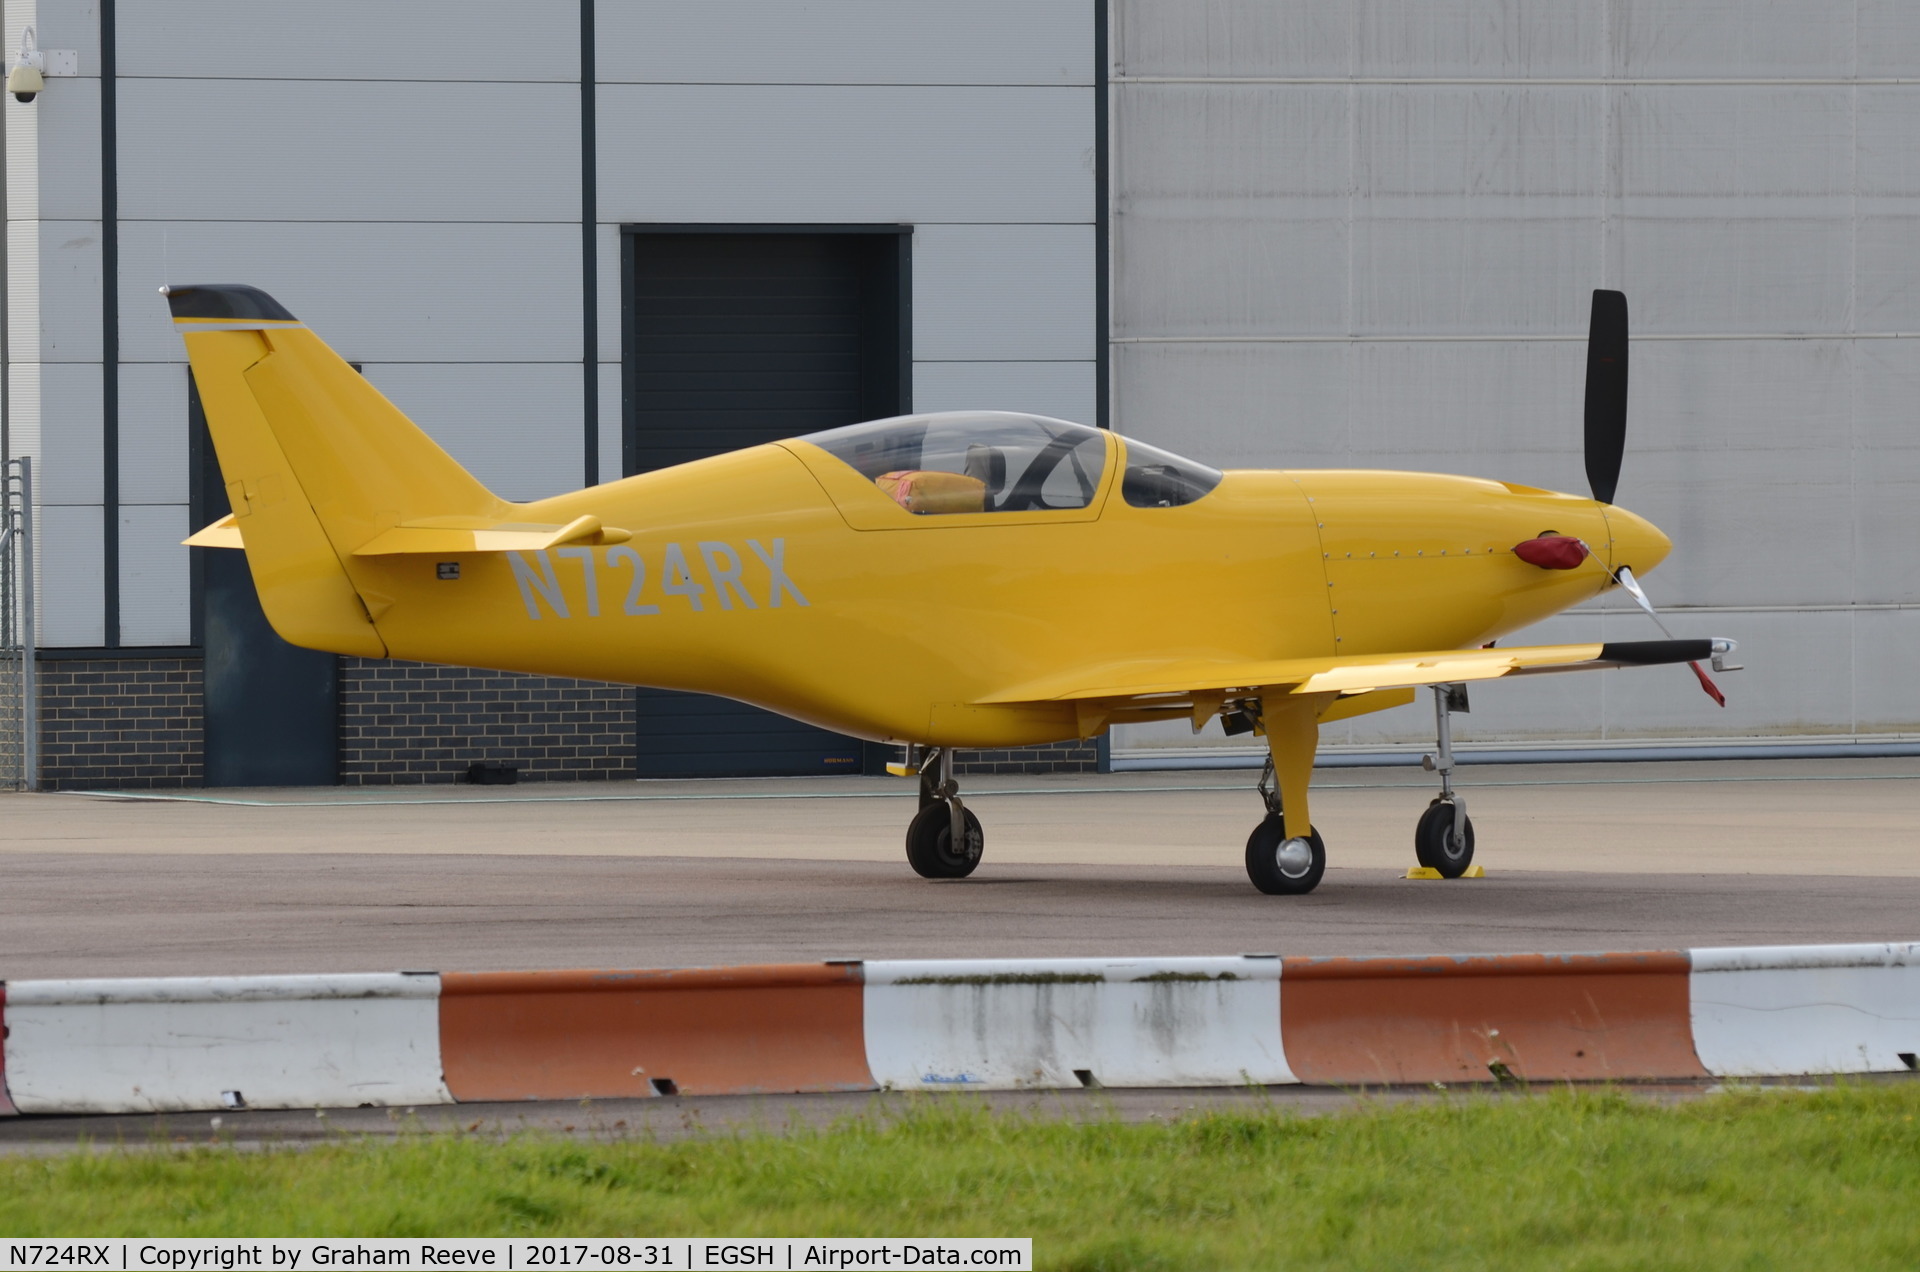 N724RX, 2006 Legend Aircraft Legend C/N 001, Parked at Norwich.